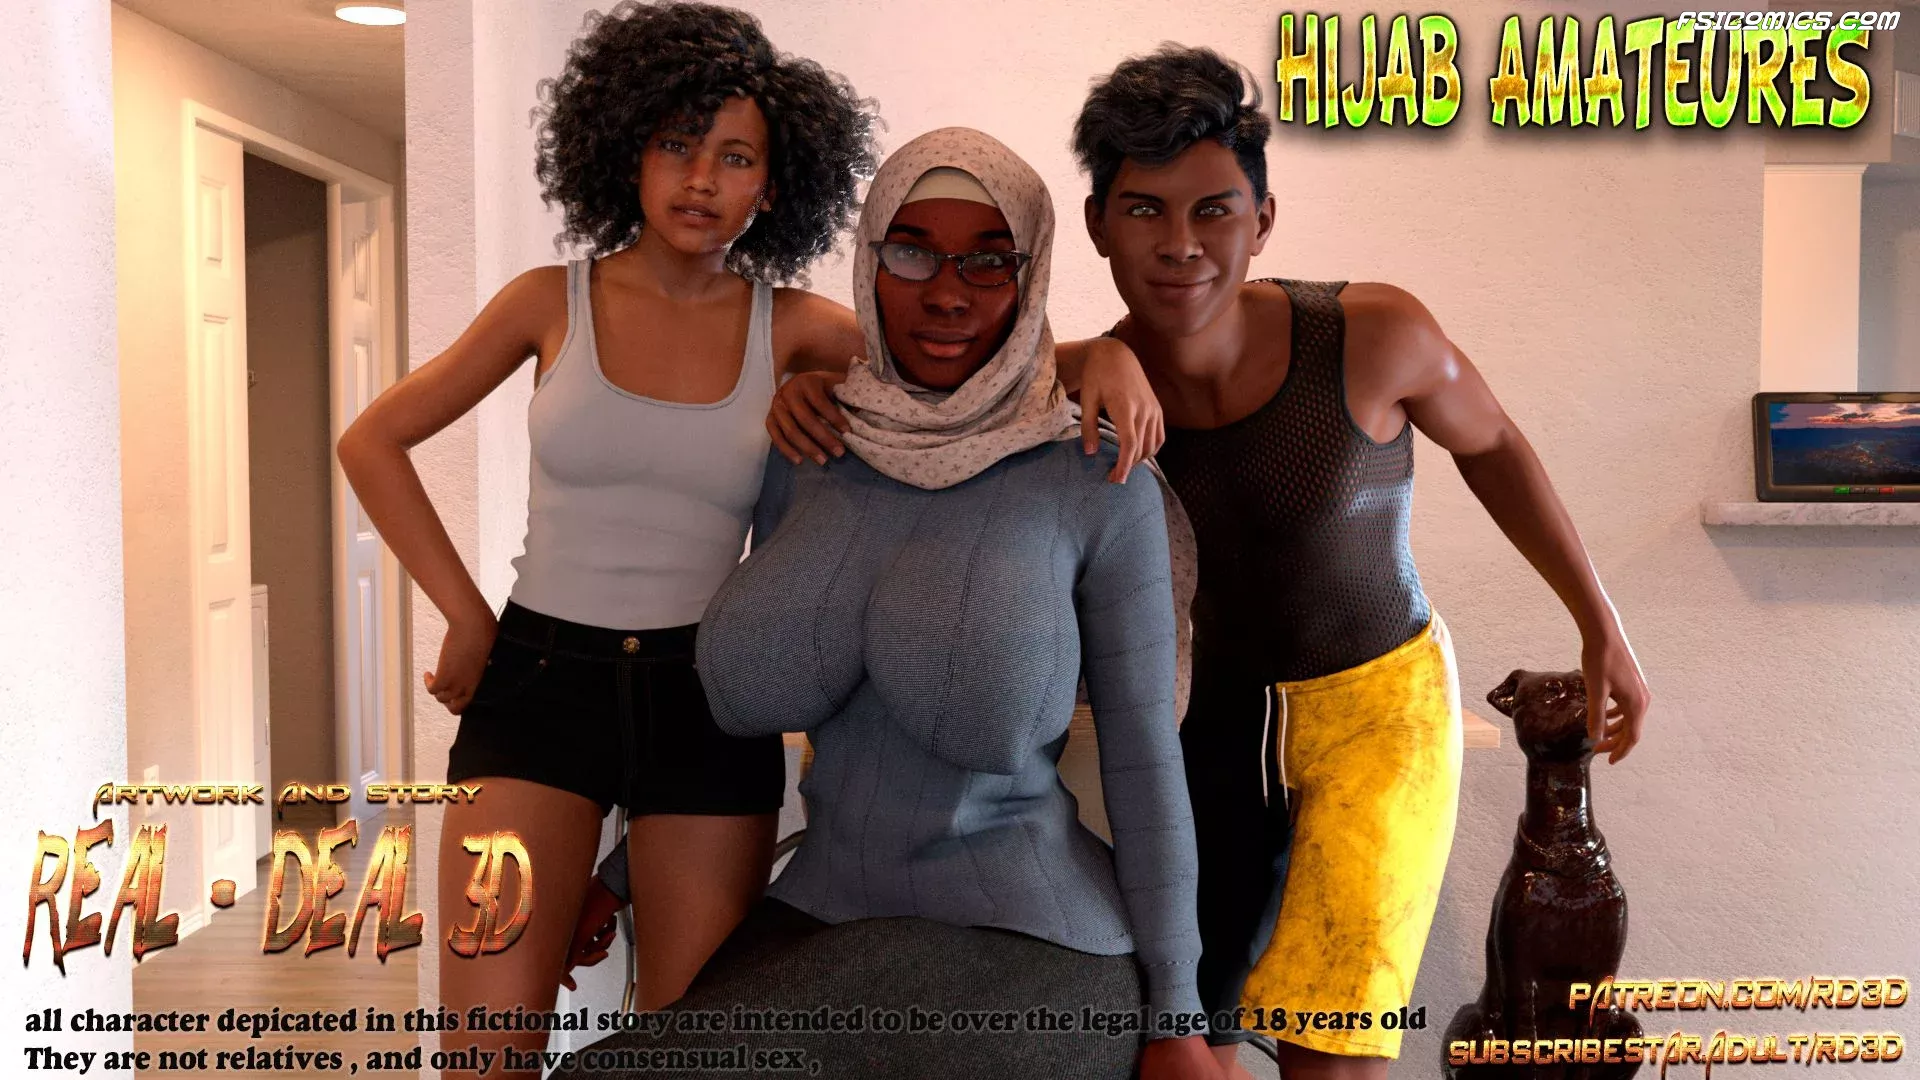 Hijab Amatures Chapter 4 - Lust Predators - Real Deal 3D - 15 - FSIComics